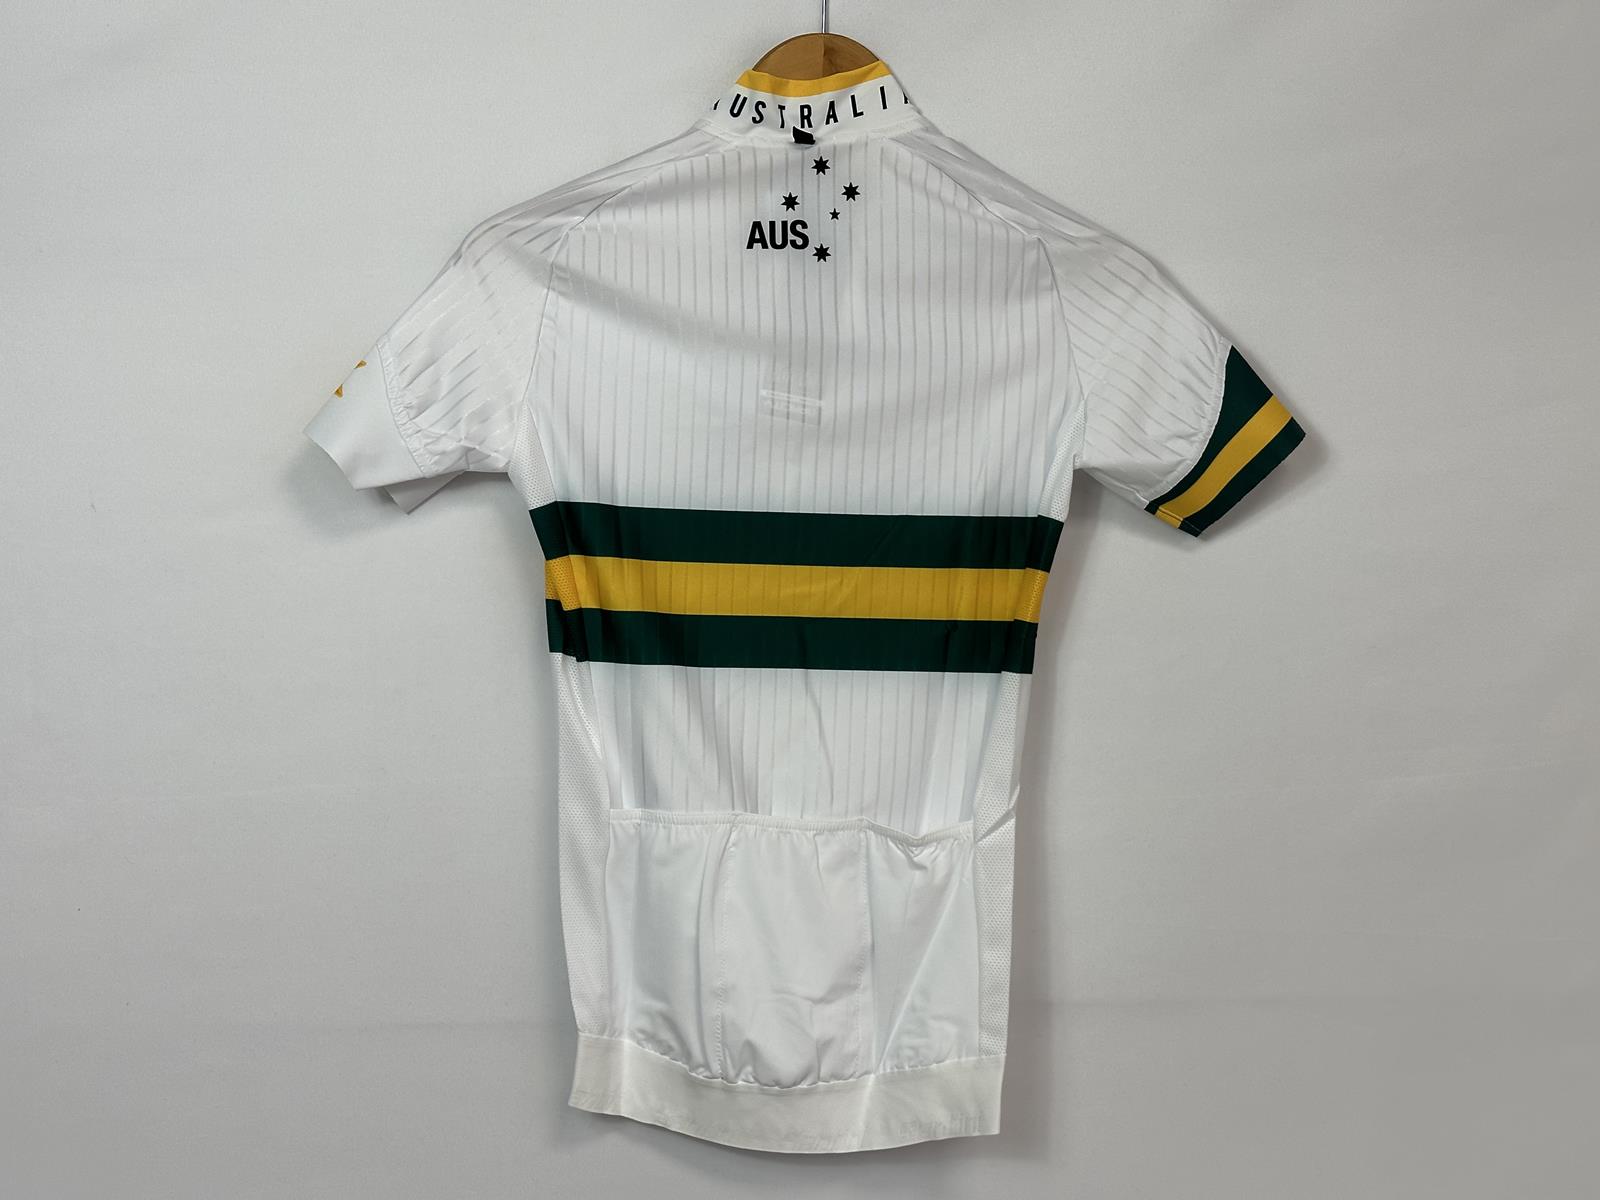 Sleek Plus Aero Jersey by Australian Cycling Team